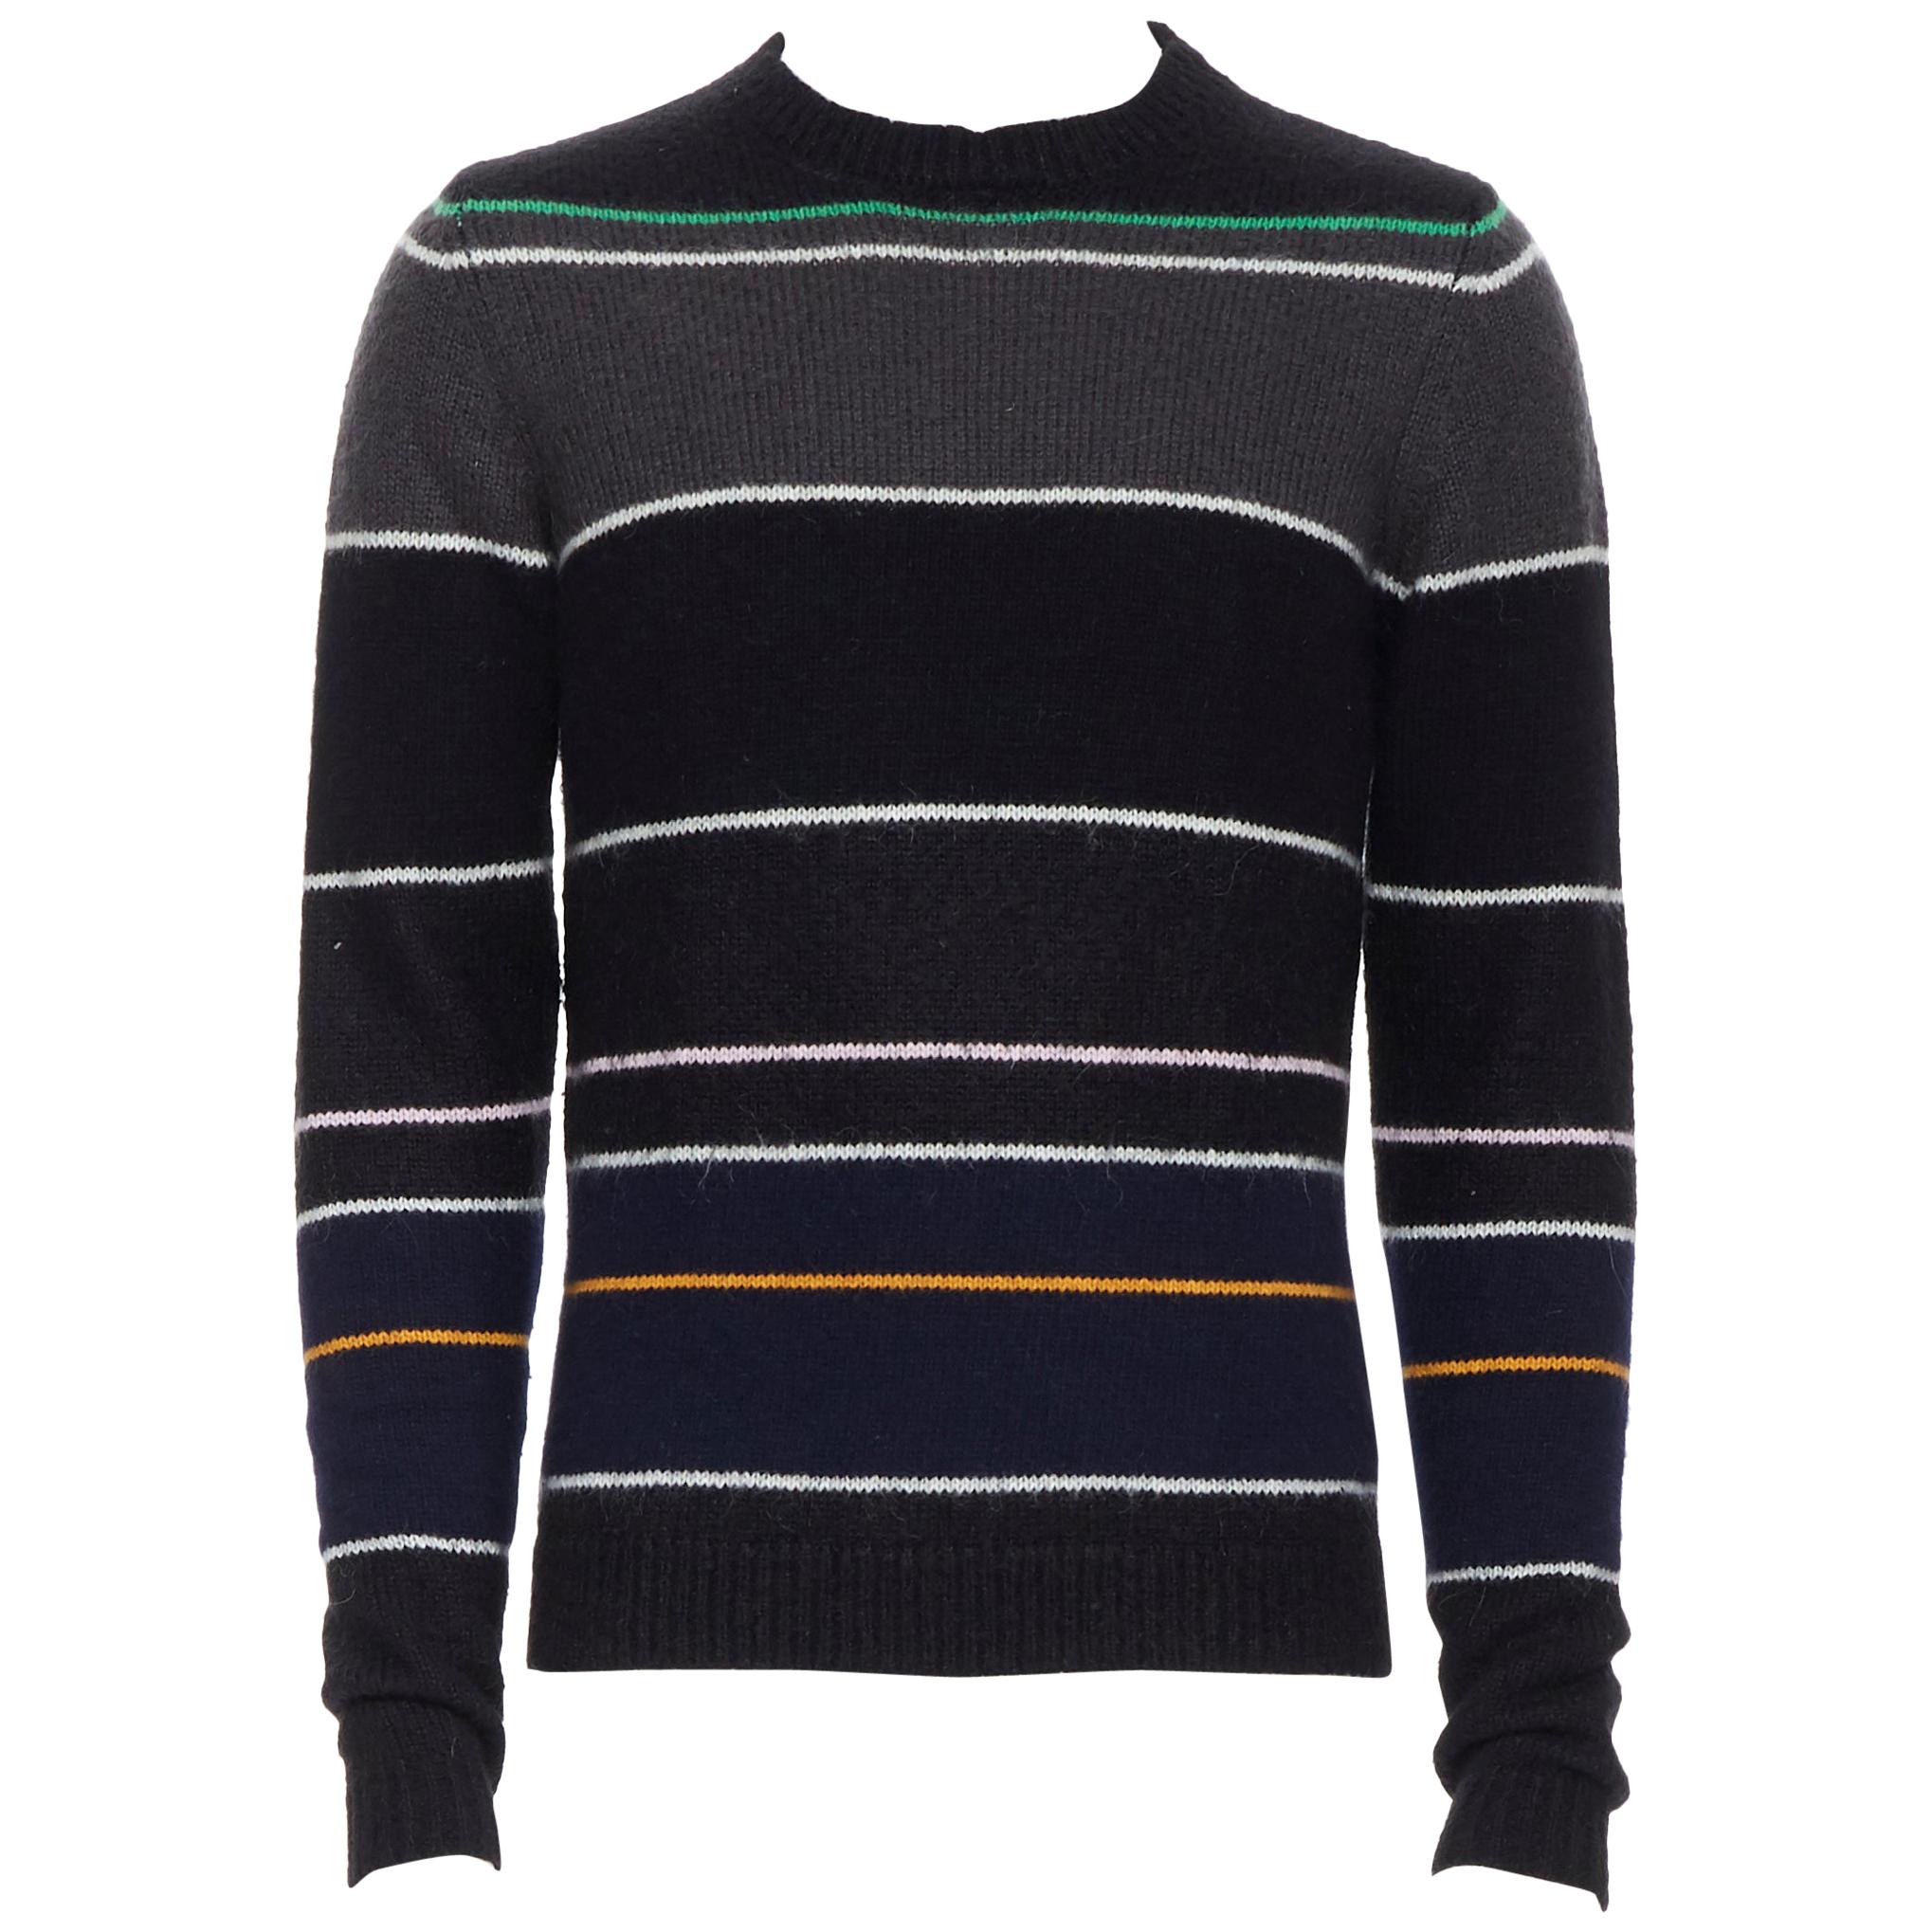 RAF SIMONS black grey merino wool blend striped long sleeve sweater S